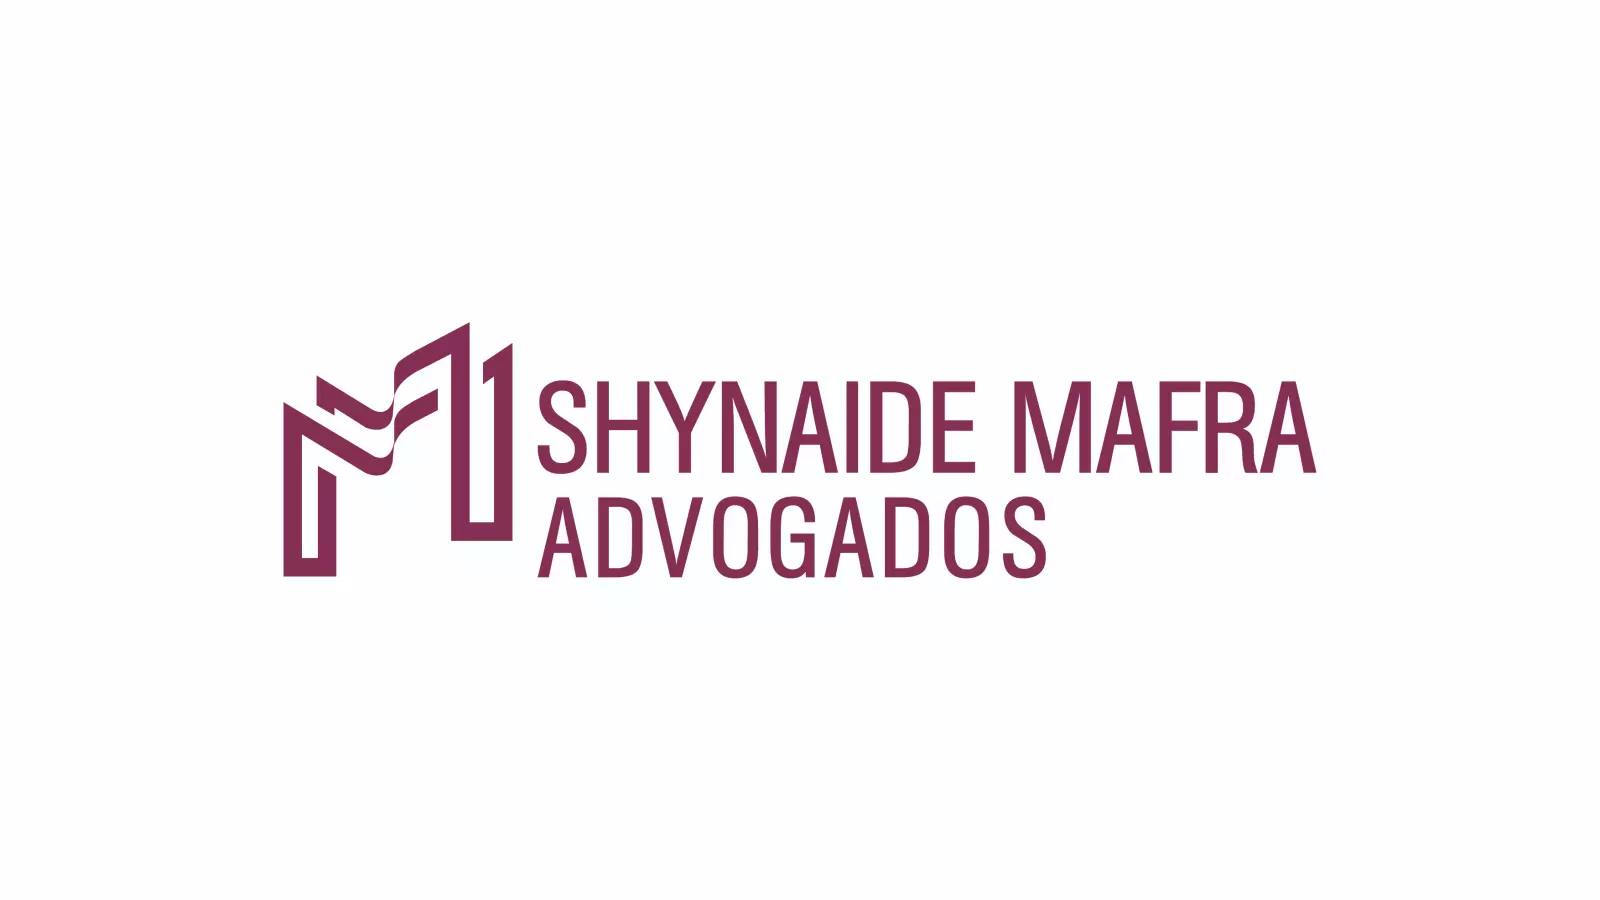 Shynaide Mafra Advogados